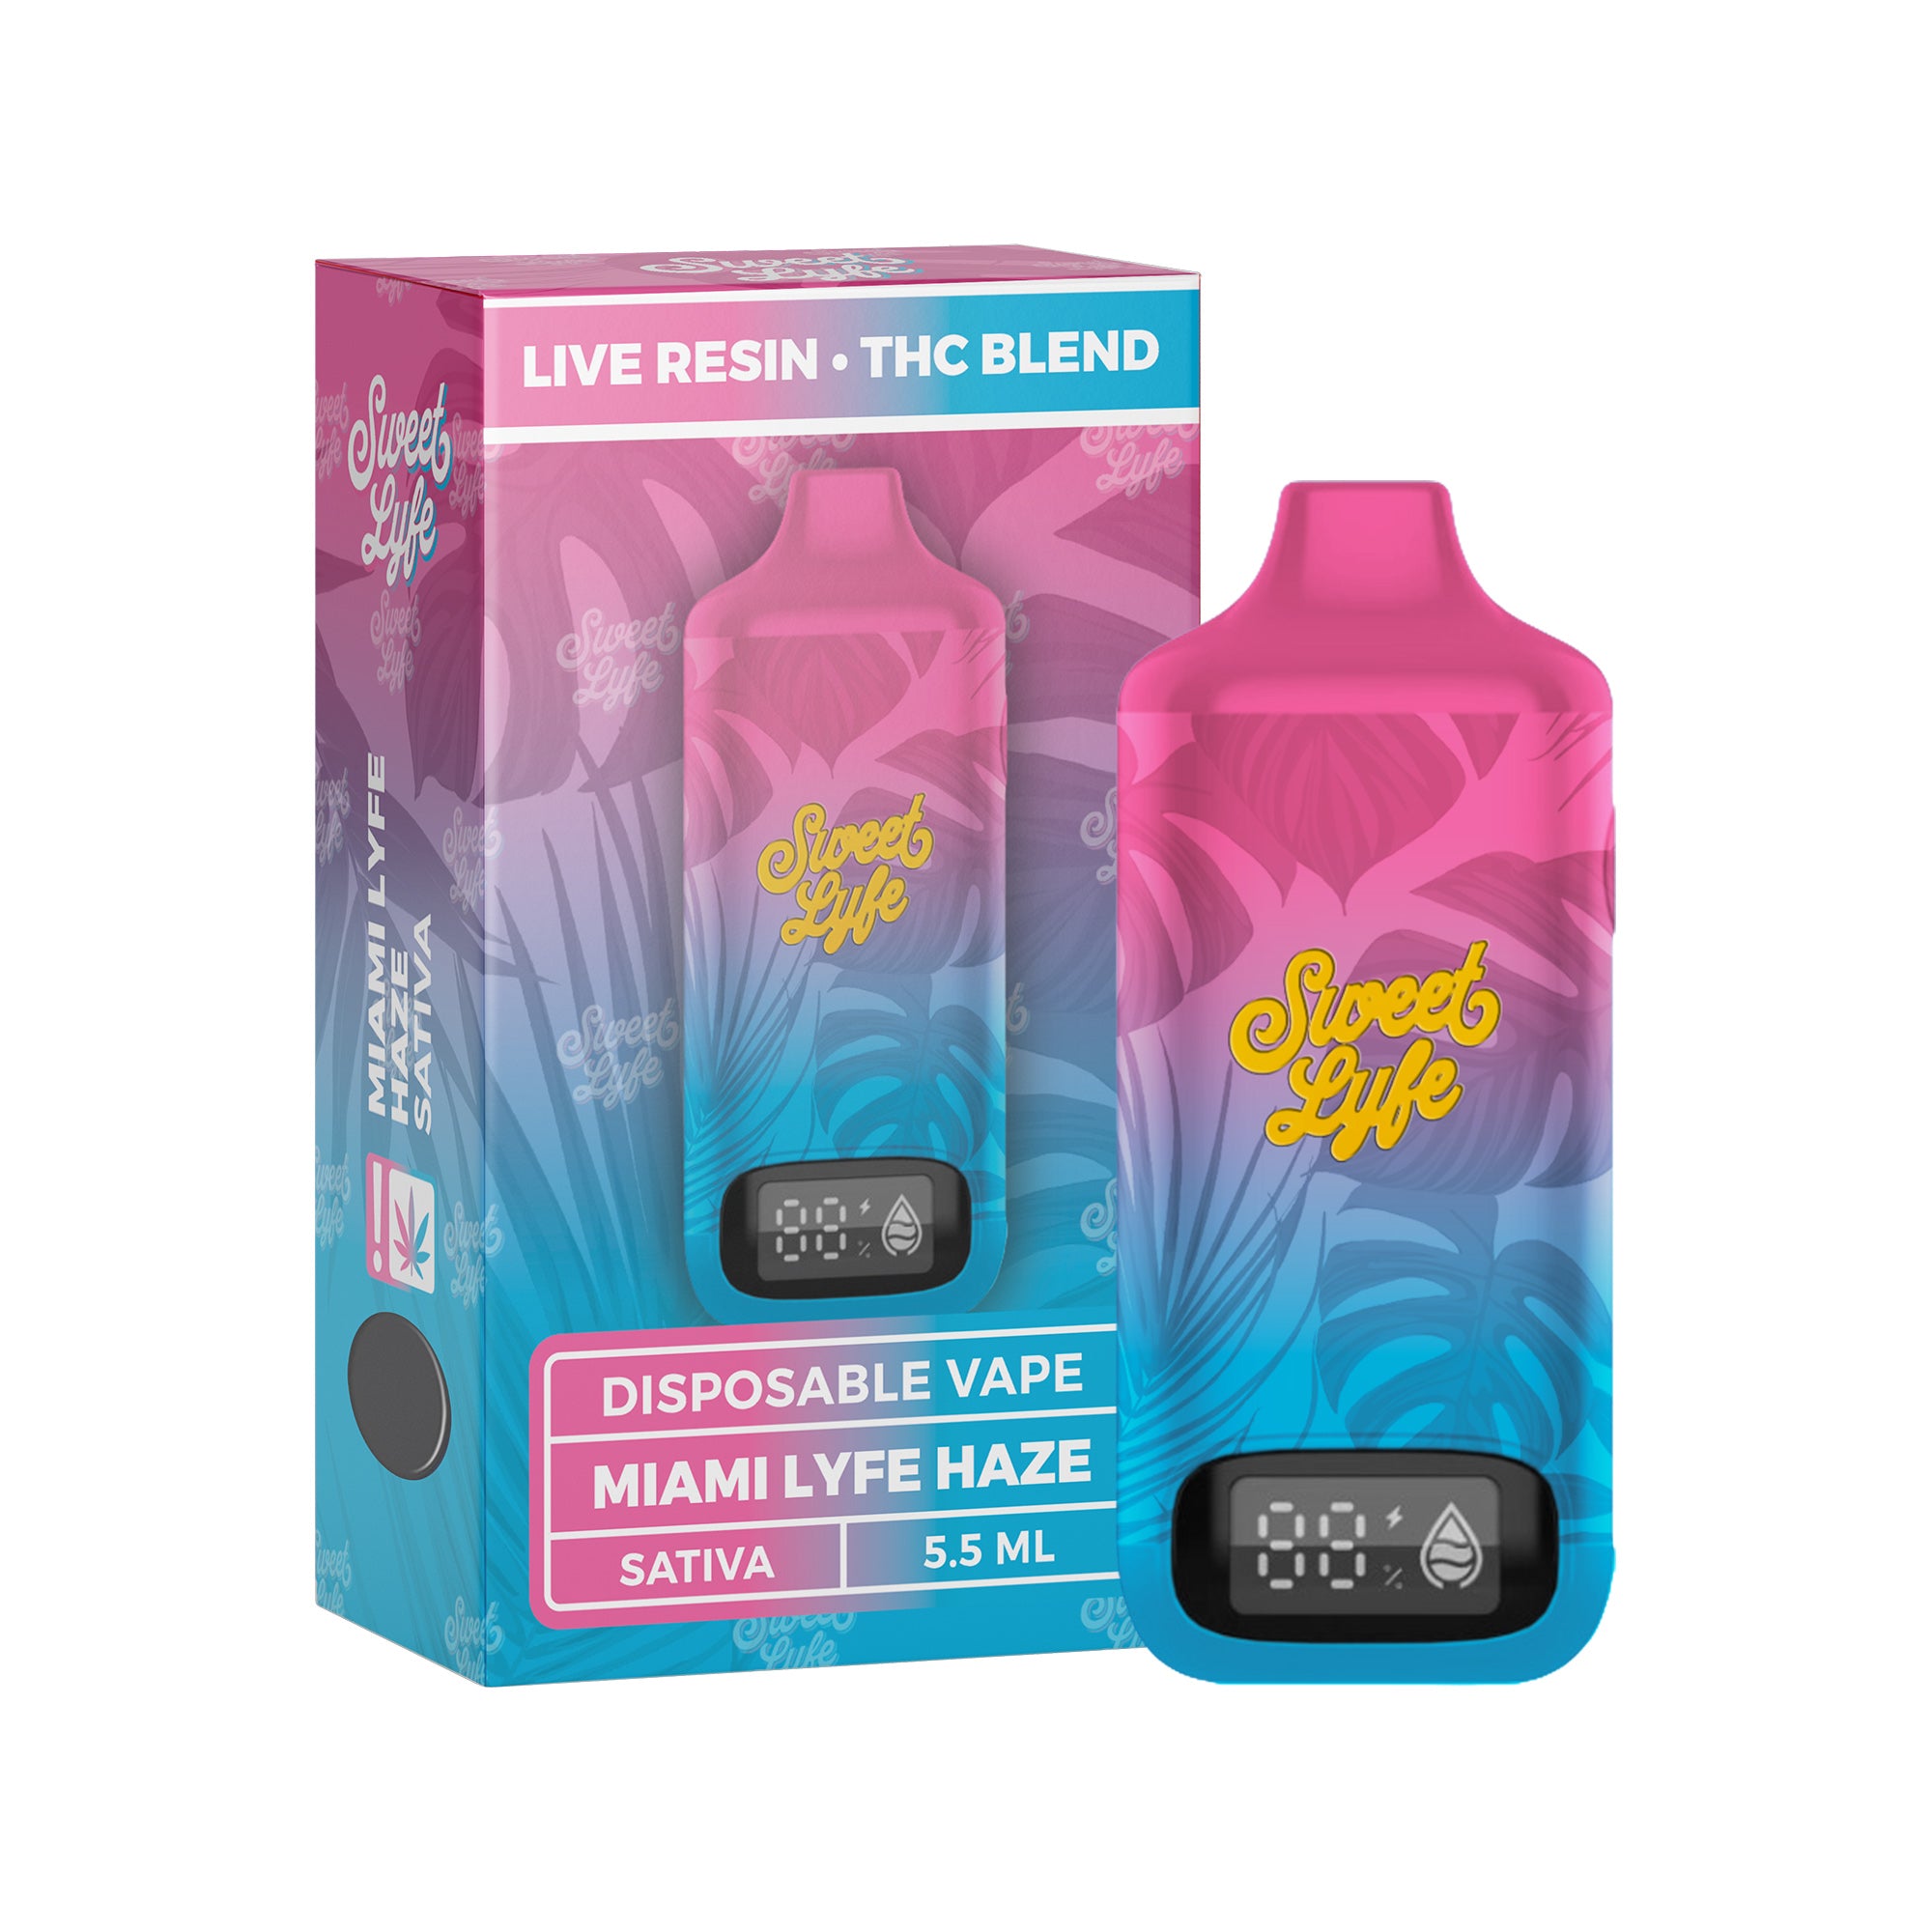 5.5ML Disposable - Live Resin • THC Blend  - Miami Lyfe Haze - Sativa